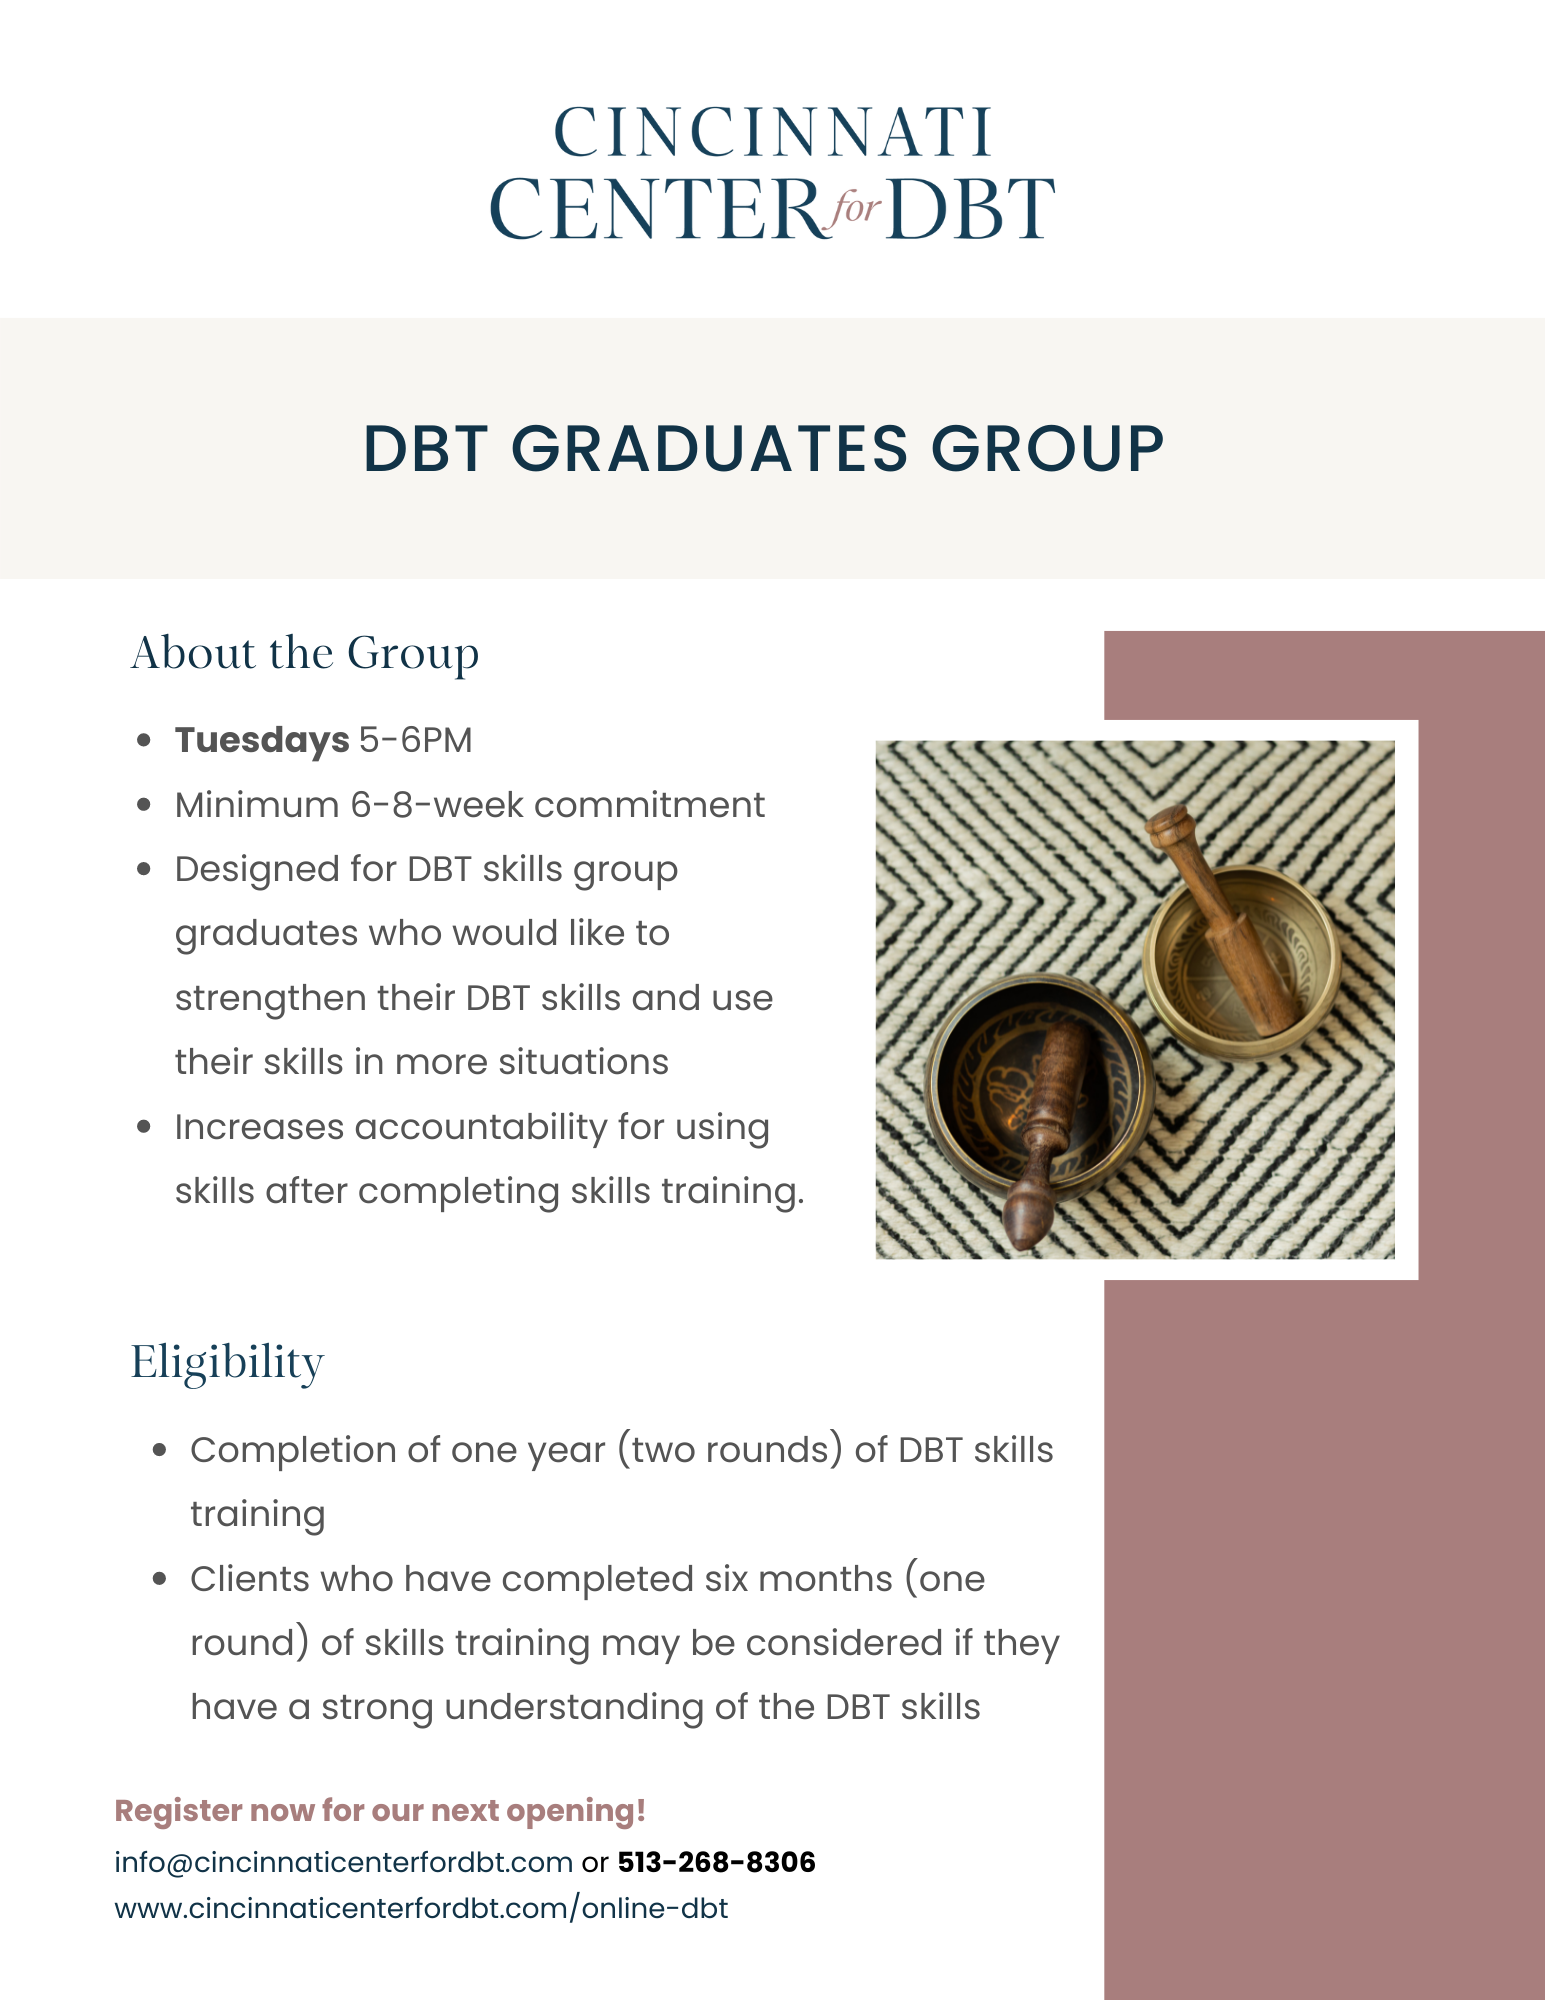 Flyer about Cincinnati Center for DBT's Graduates Group